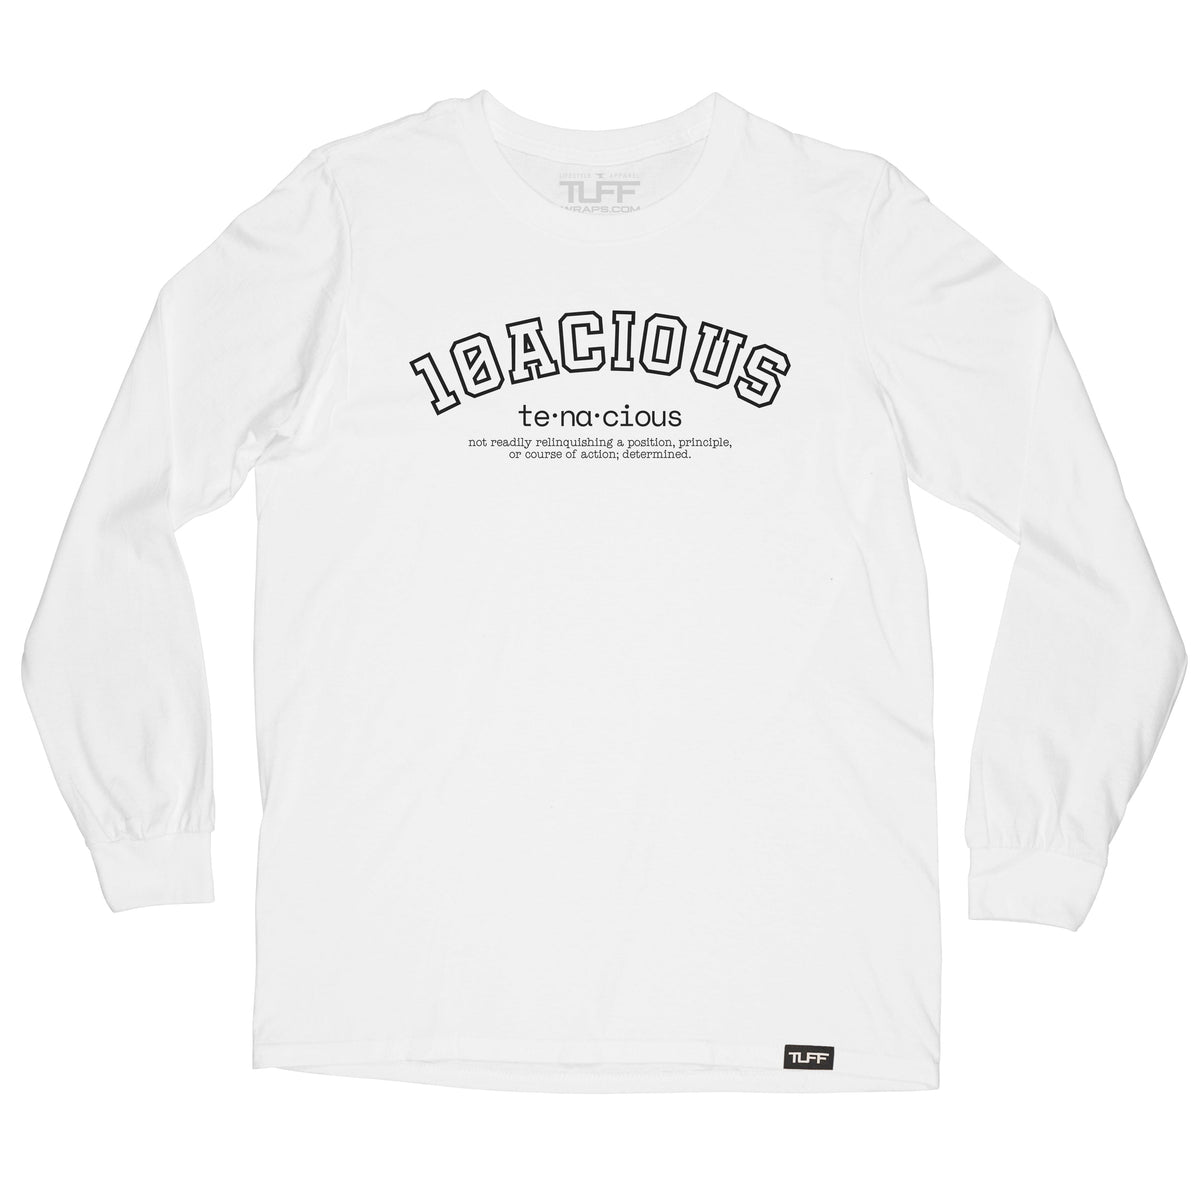 TUFF 10acious Definition Long Sleeve Tee Men&#39;s Long Sleeve T-Shirt